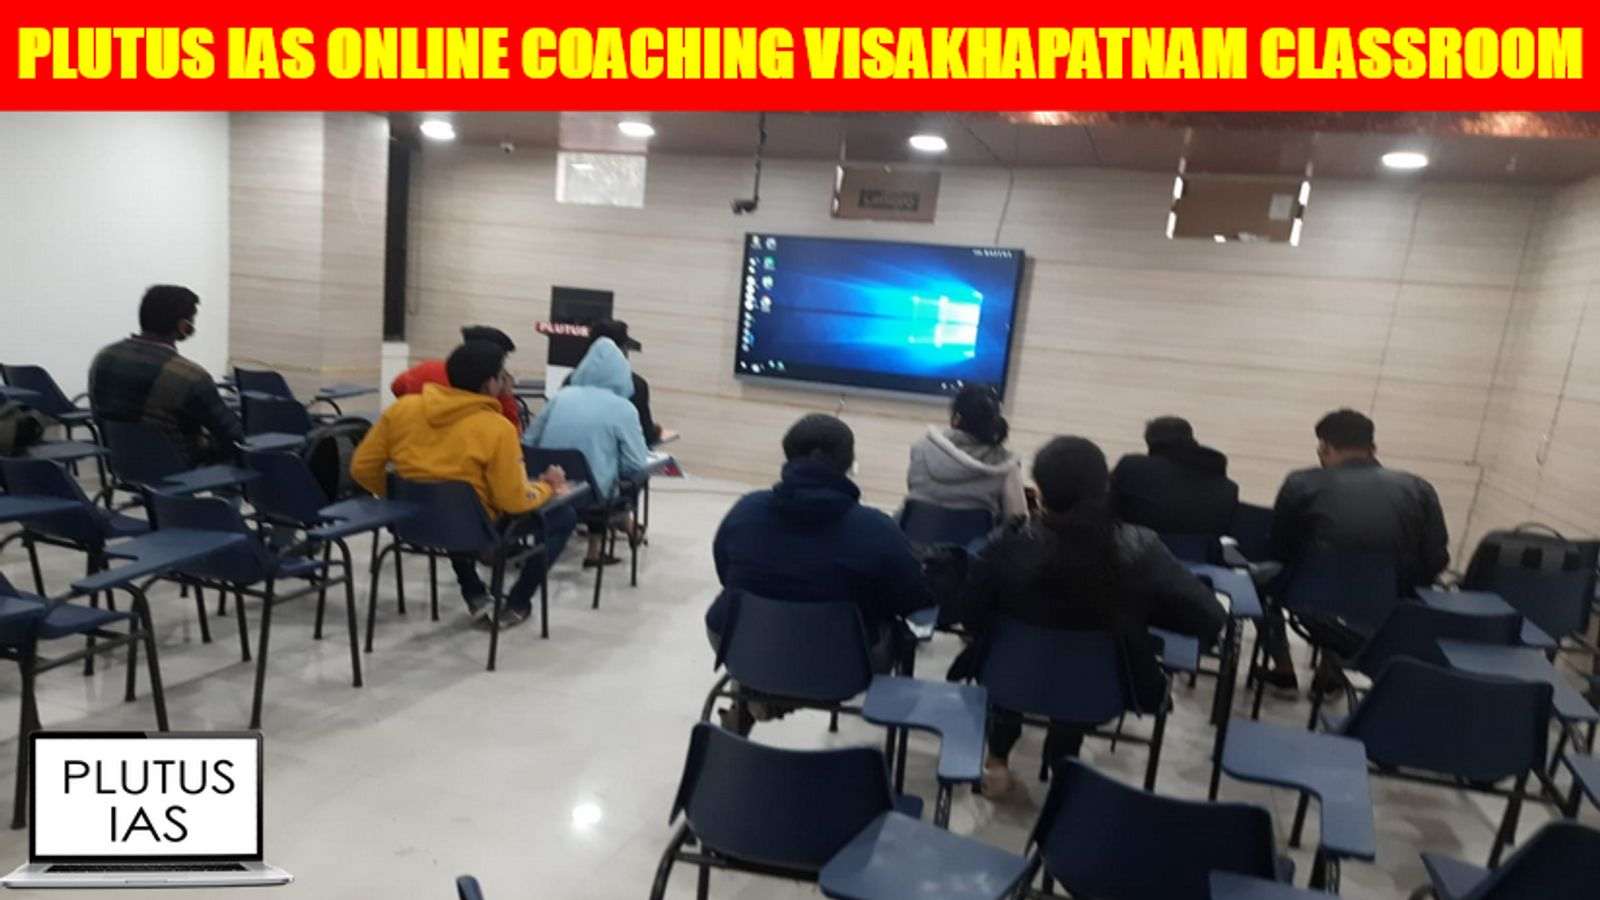 Plutus IAS Online Coaching Visakhapatnam Class Room